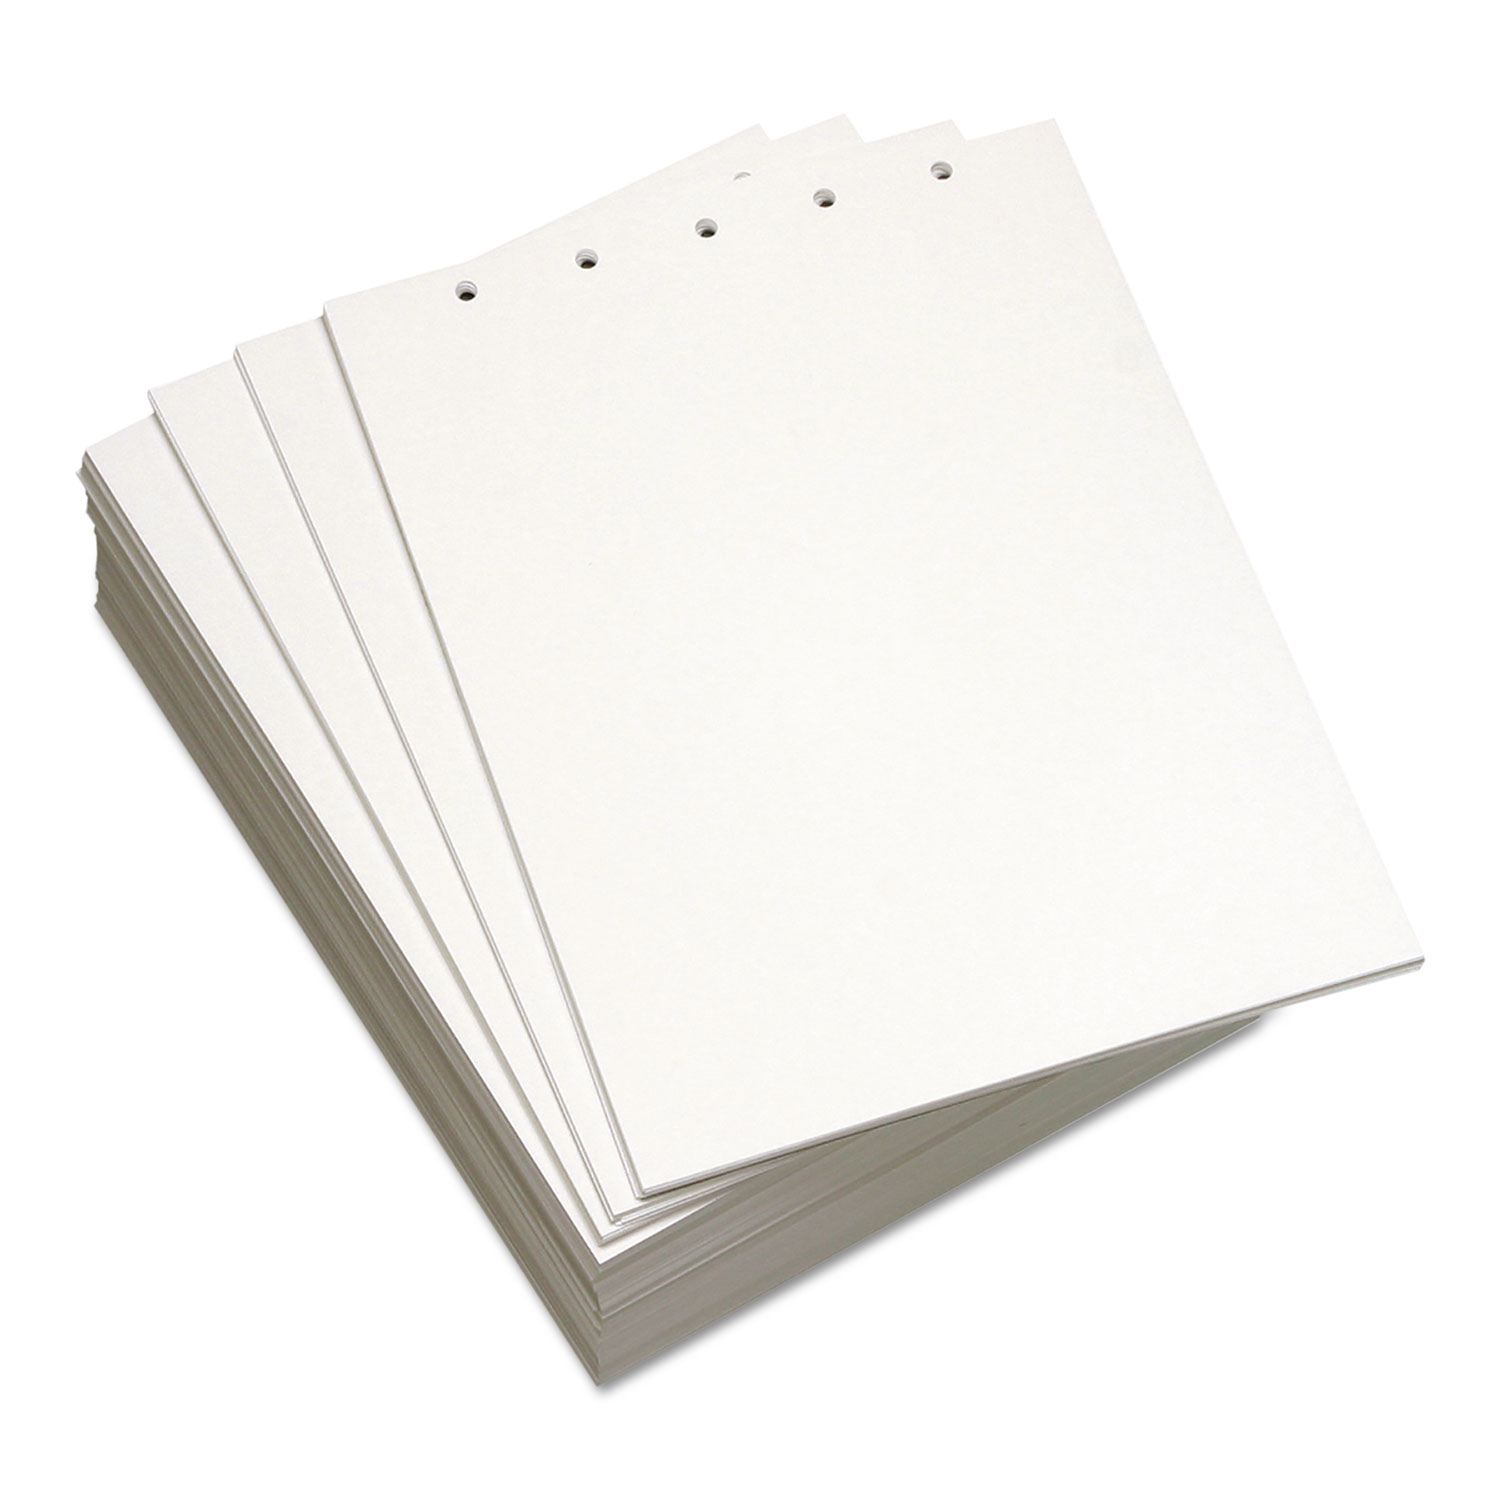  Domtar 851254 Custom Cut-Sheet Copy Paper, 92 Bright, 5-Hole, 20lb, 8.5 x 11, White, 500/Ream (DMR851254) 